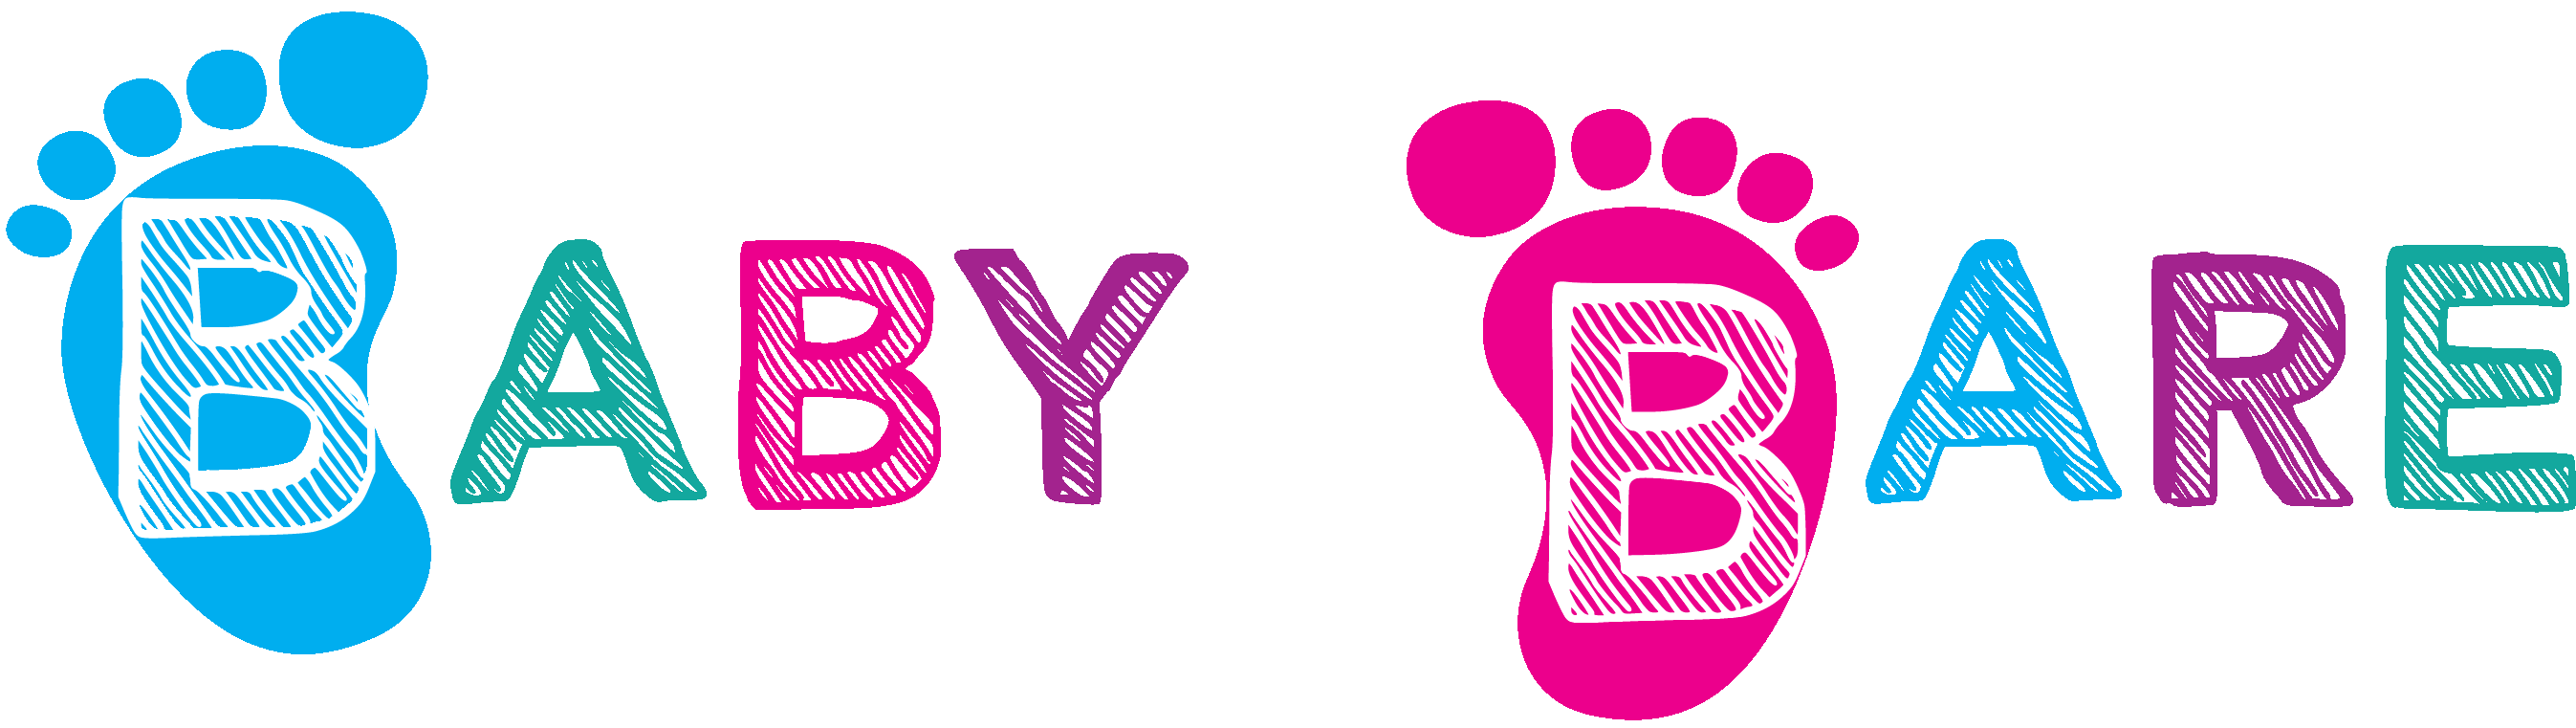 Baby bare logo